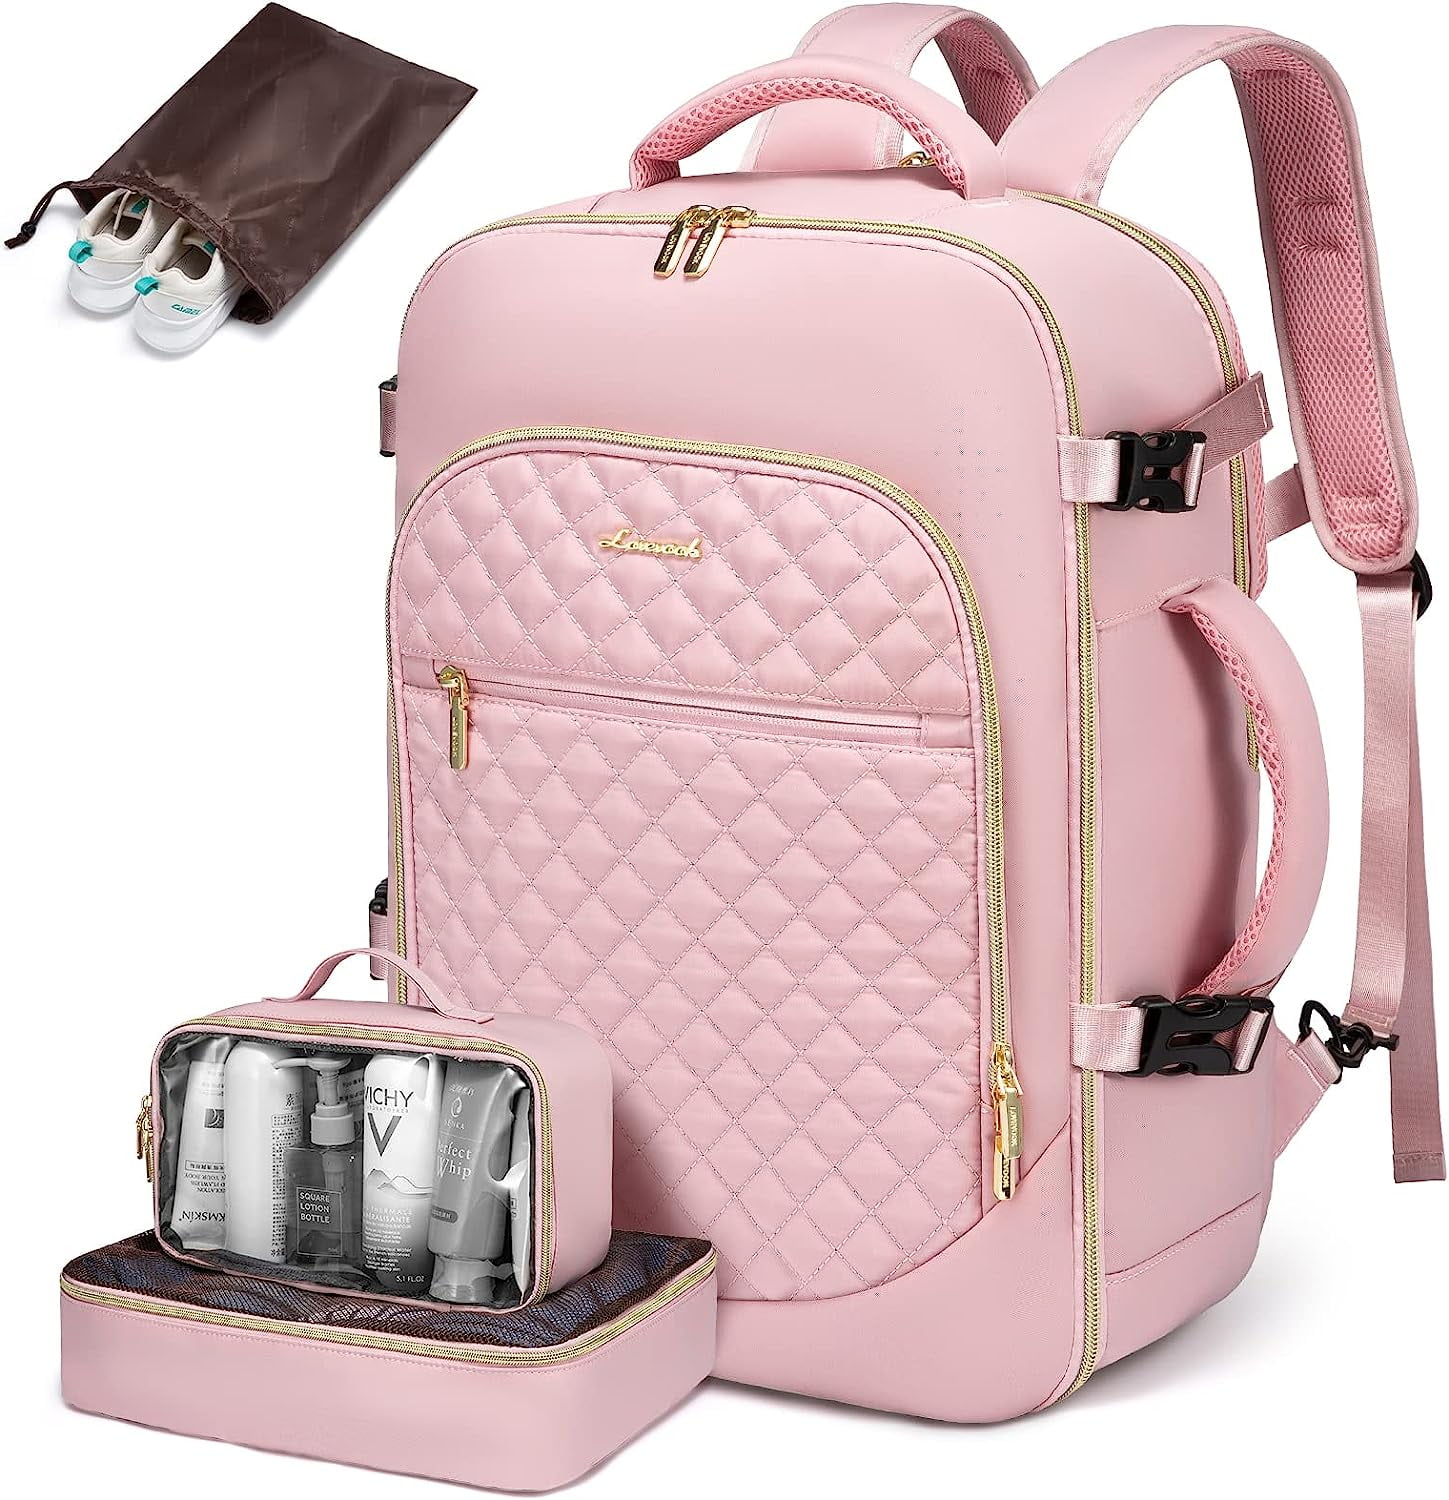 Lovevook Carry-on Luggage Backpack,Waterproof Travel Laptop Backpack ...